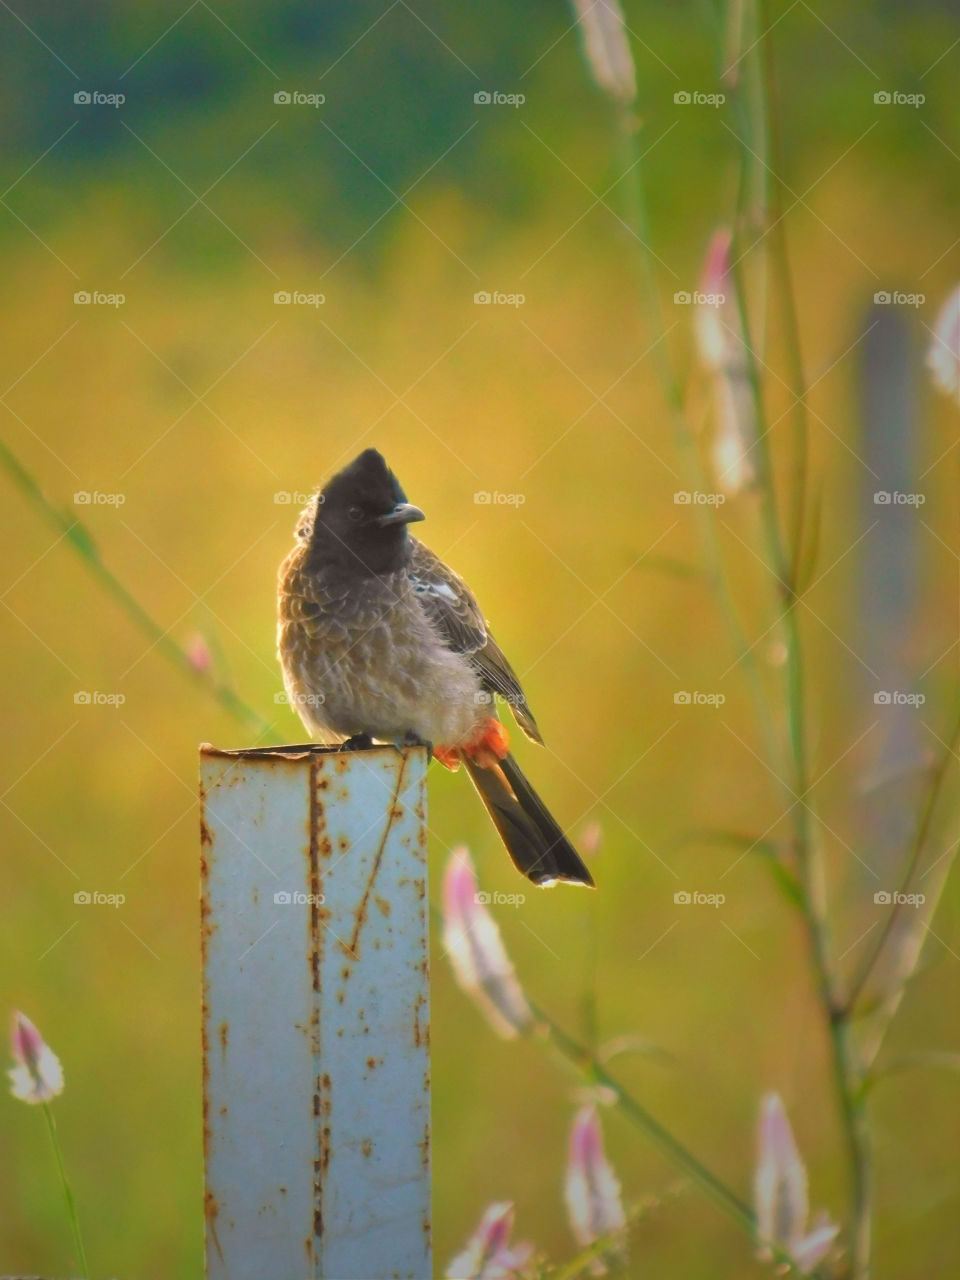 Bird image, Red Vented bulbul bird sitting on iron pole or bar having yellowish blurred background.